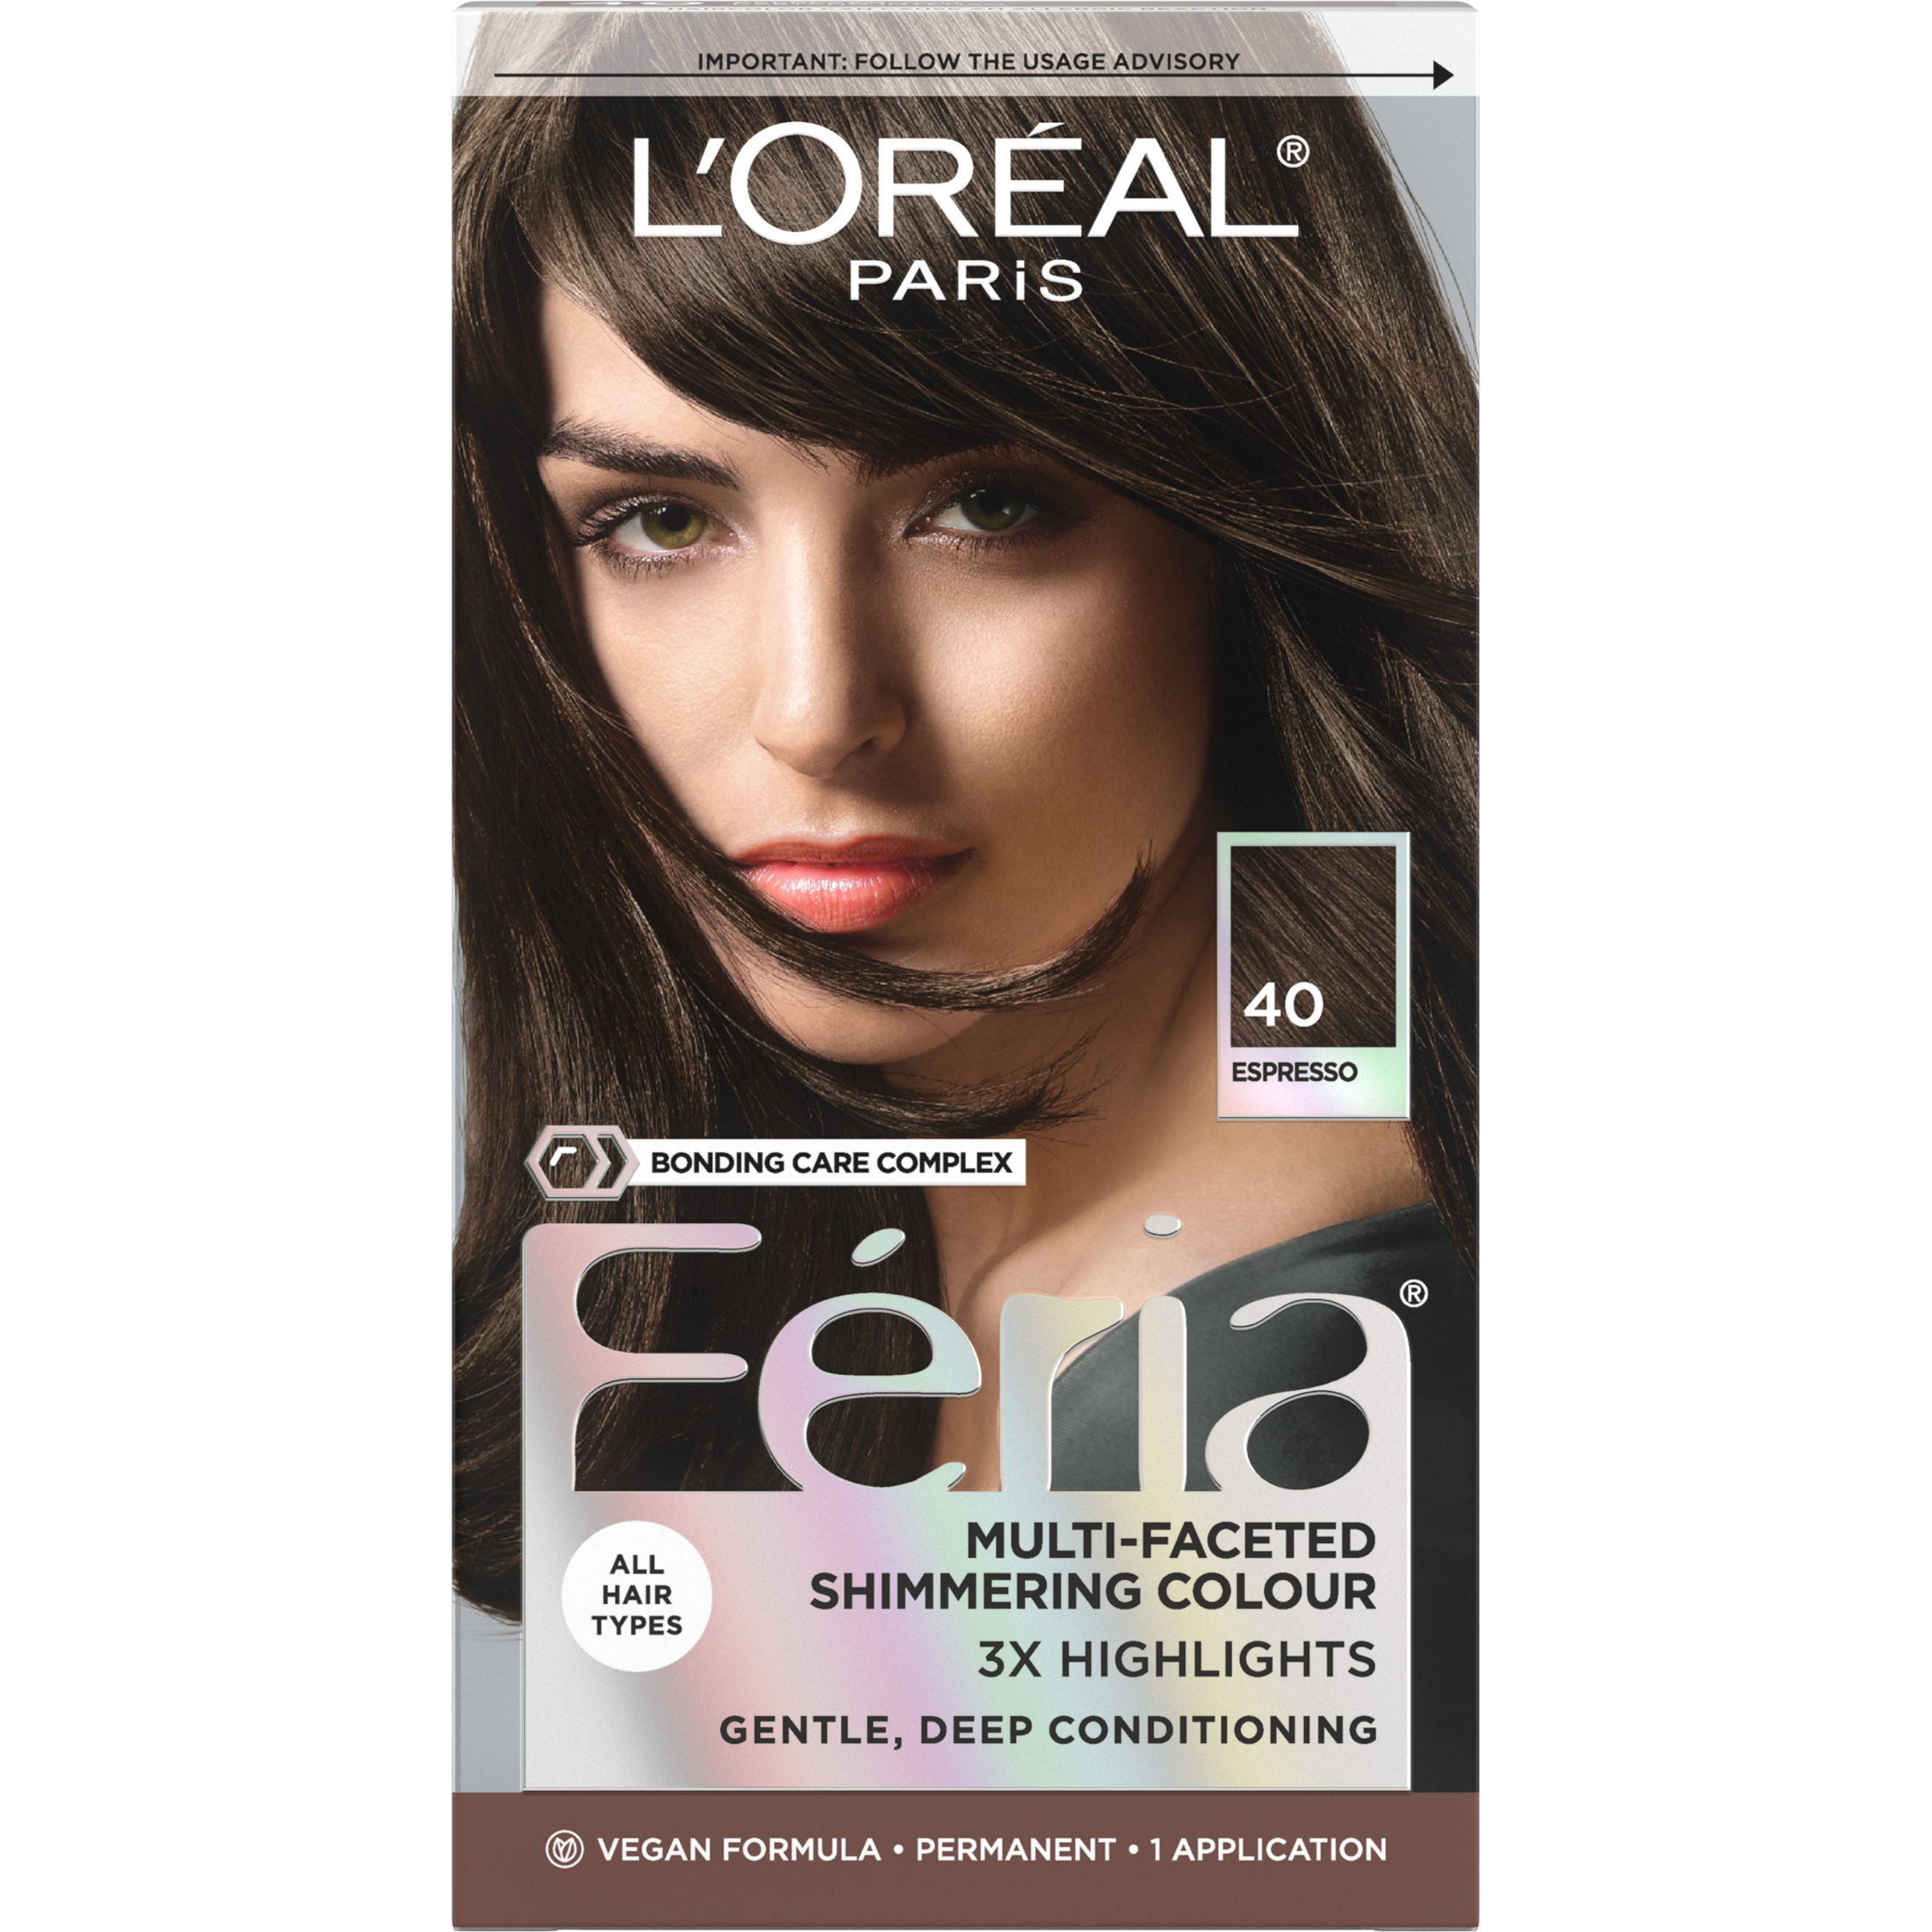 L'Oreal Paris Feria Permanent Hair Color, 40 Espresso Deeply Brown - image 1 of 9